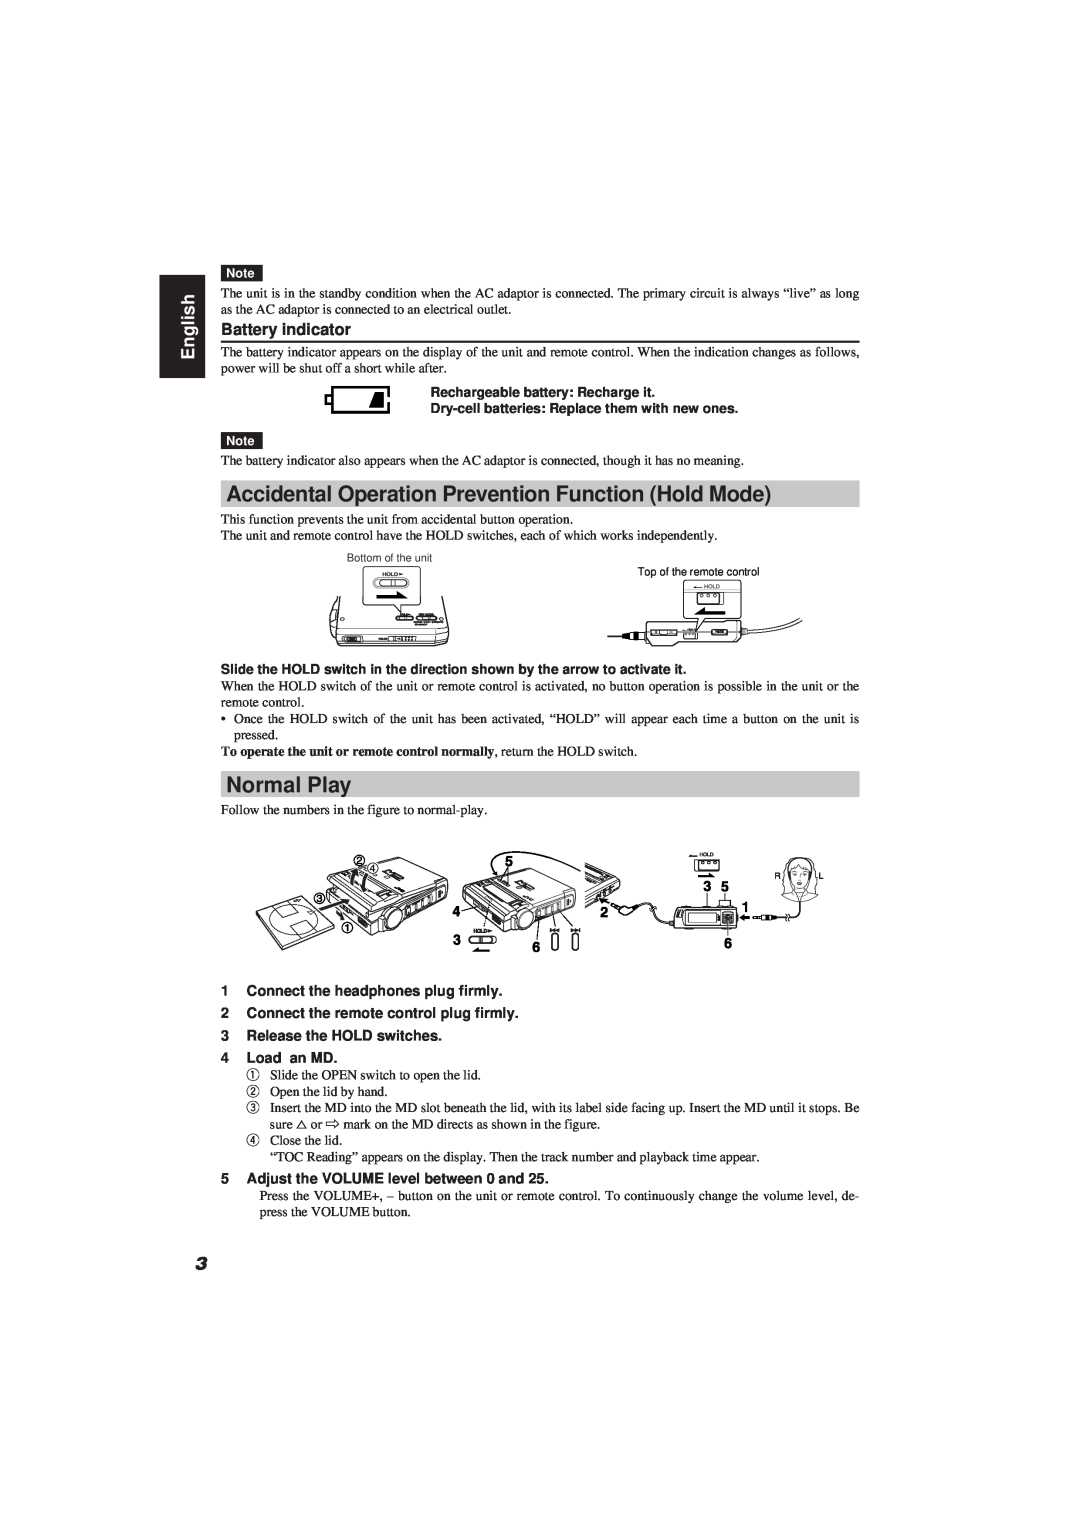 JVC XM-R70SL/BK manual Normal Play, Battery indicator, 1Connect the headphones plug firmly, English 